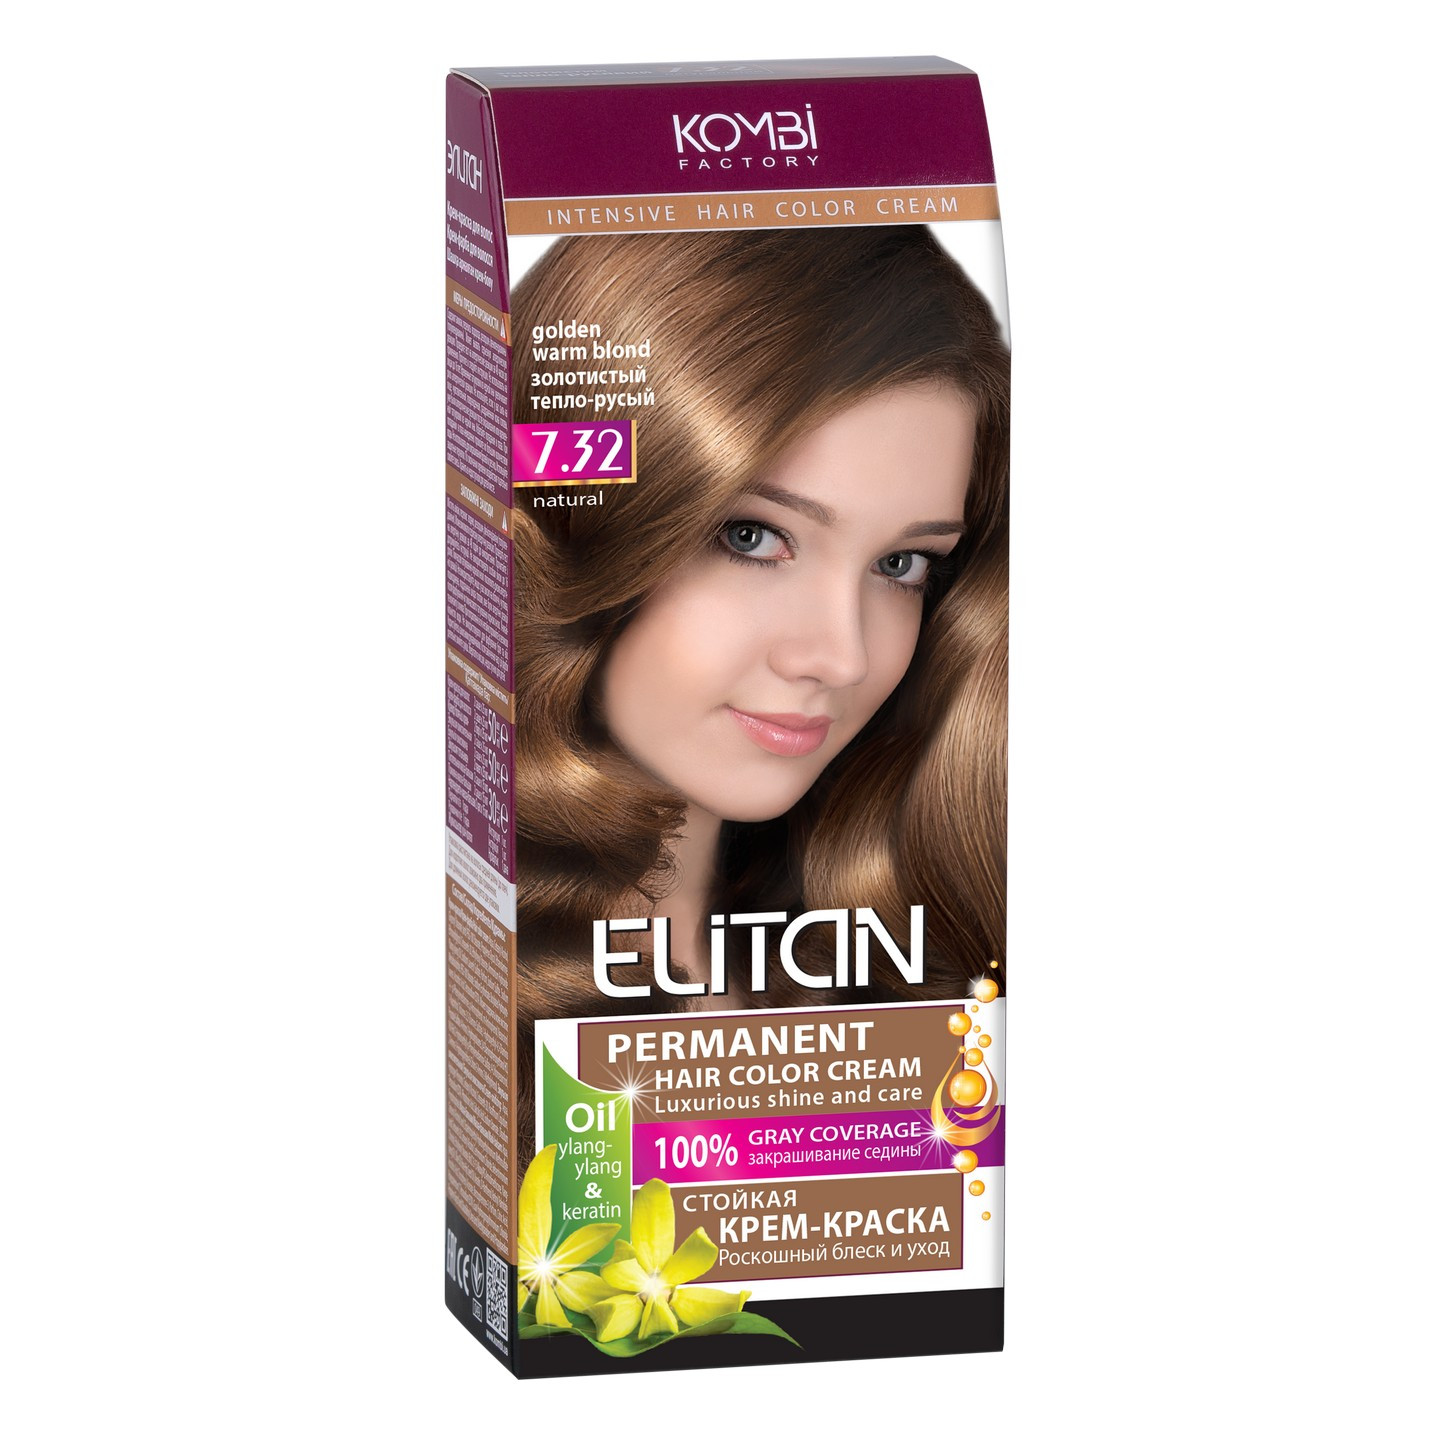 Стійка крем-фарба для волосся «Elitan» intensive and natural color, 7.32 — Золотистий тепло-русявий